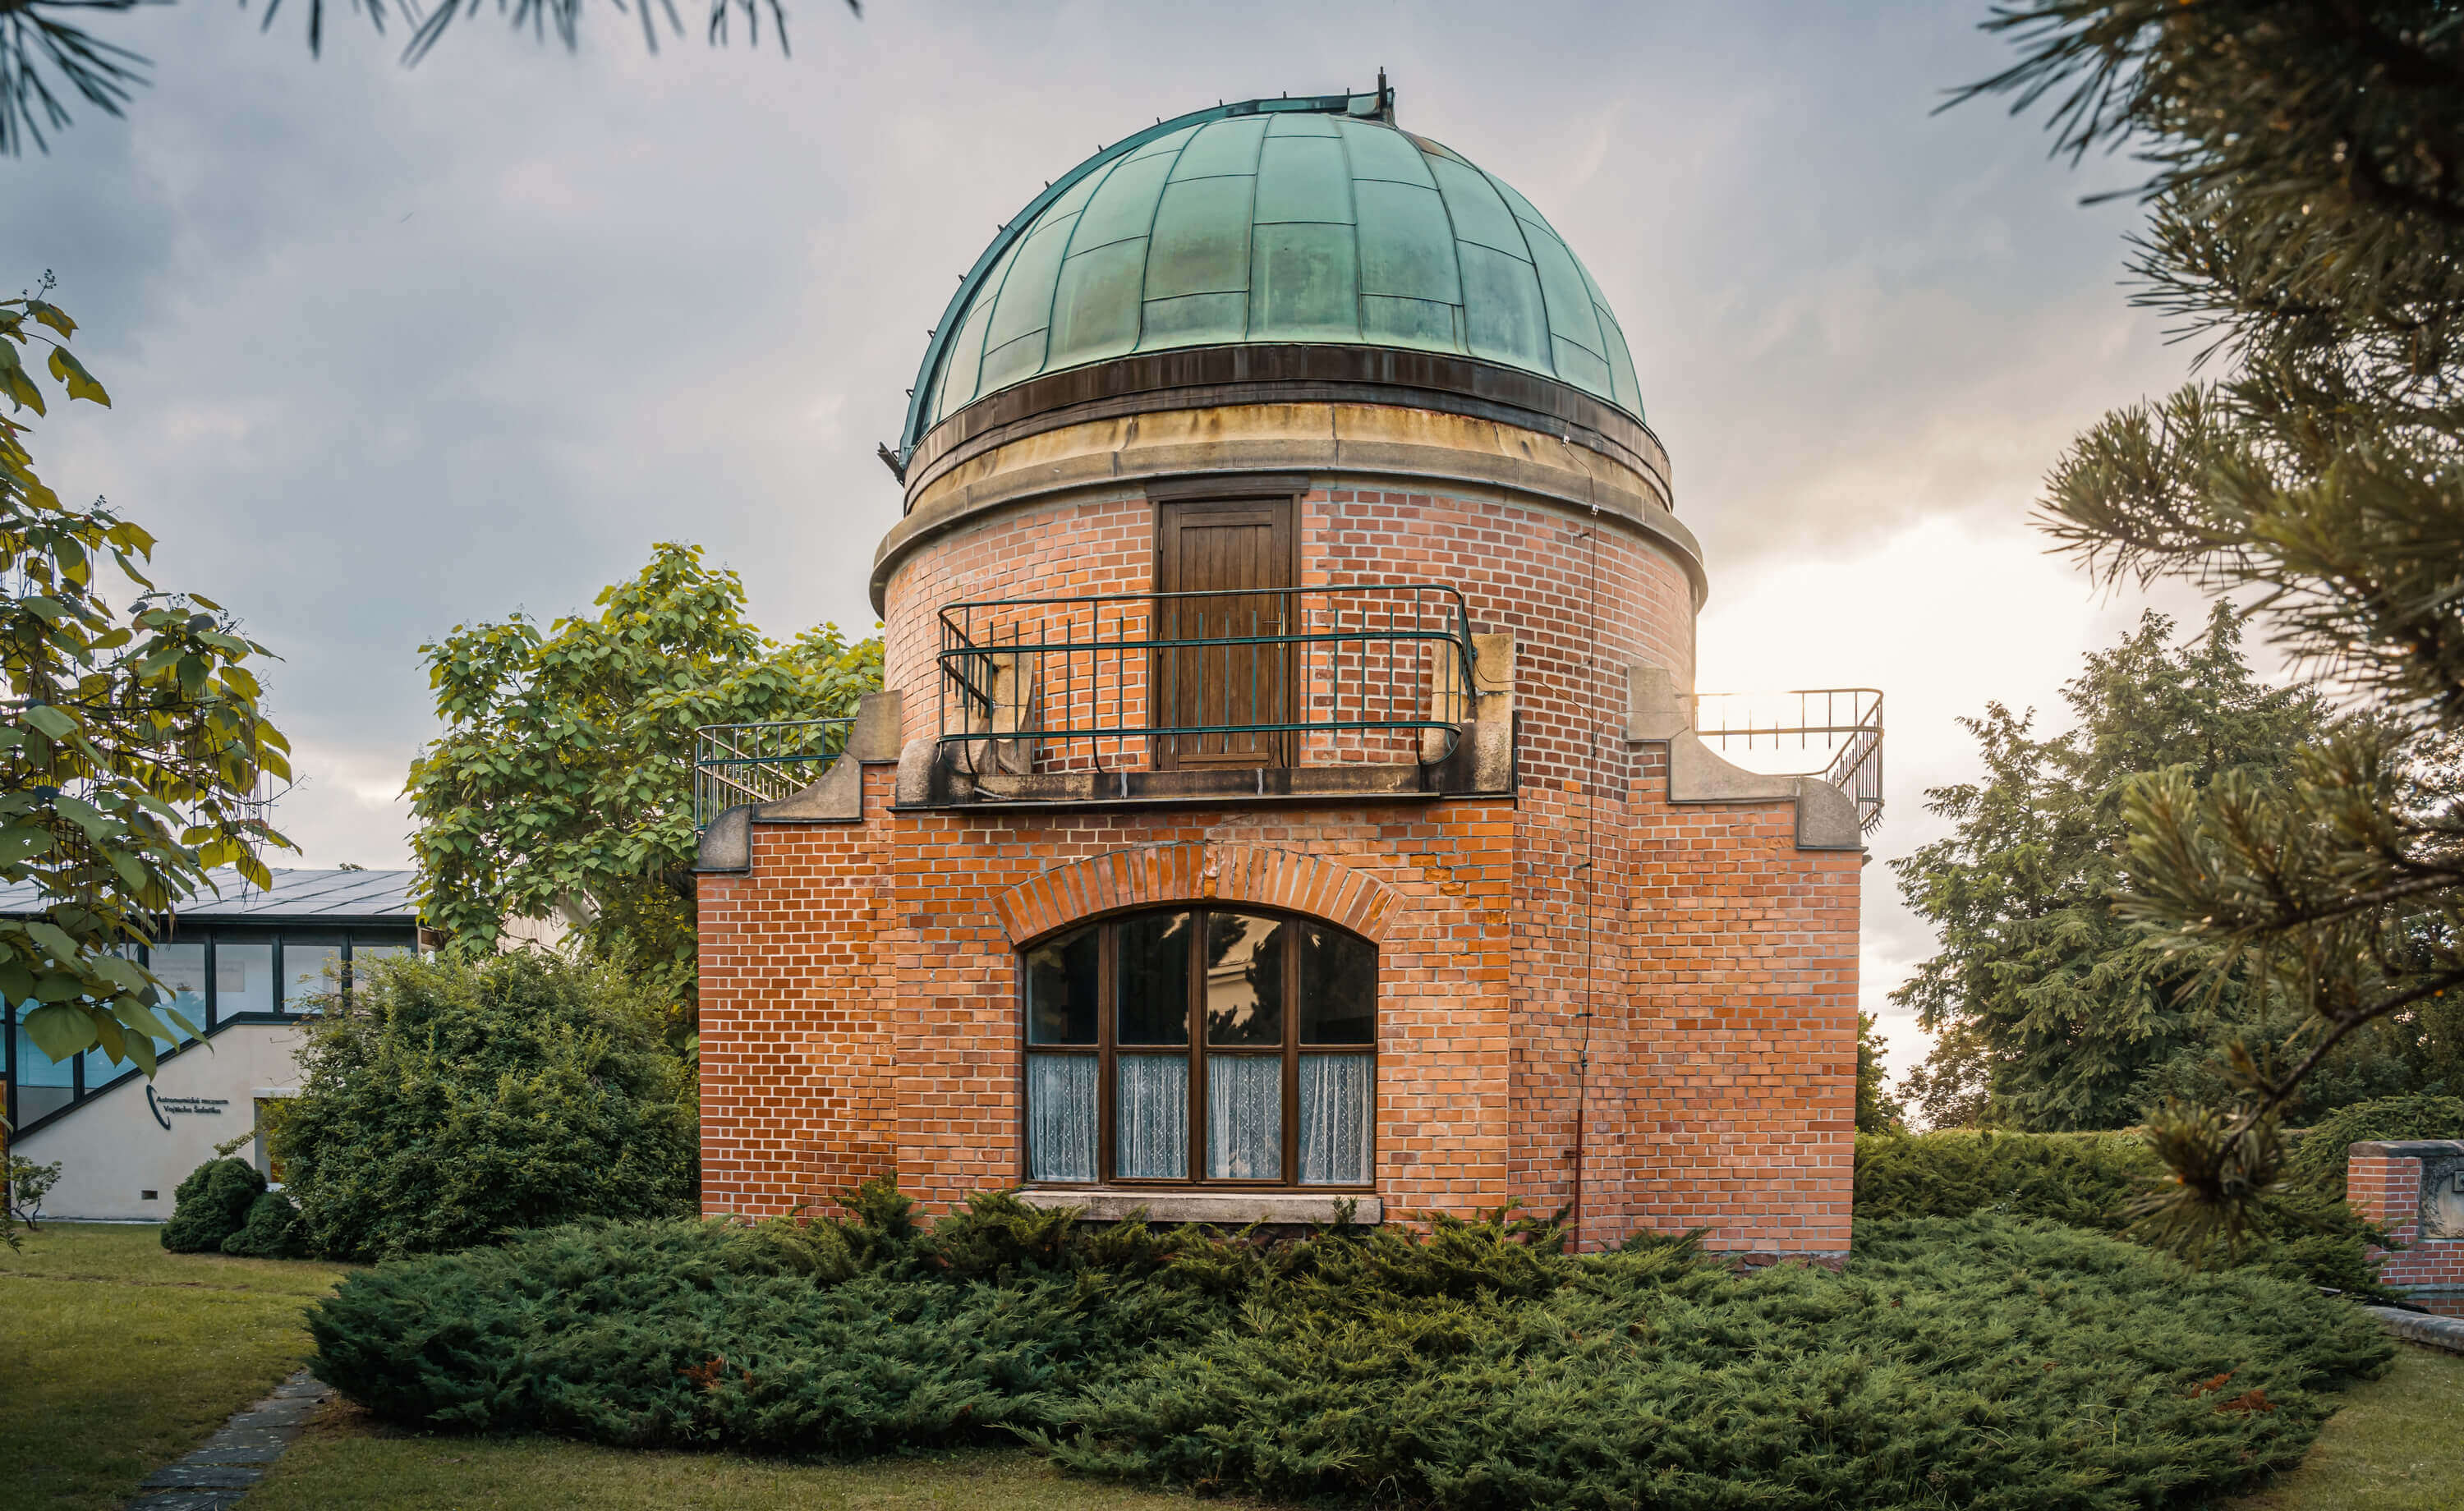 Ondrejov observatory